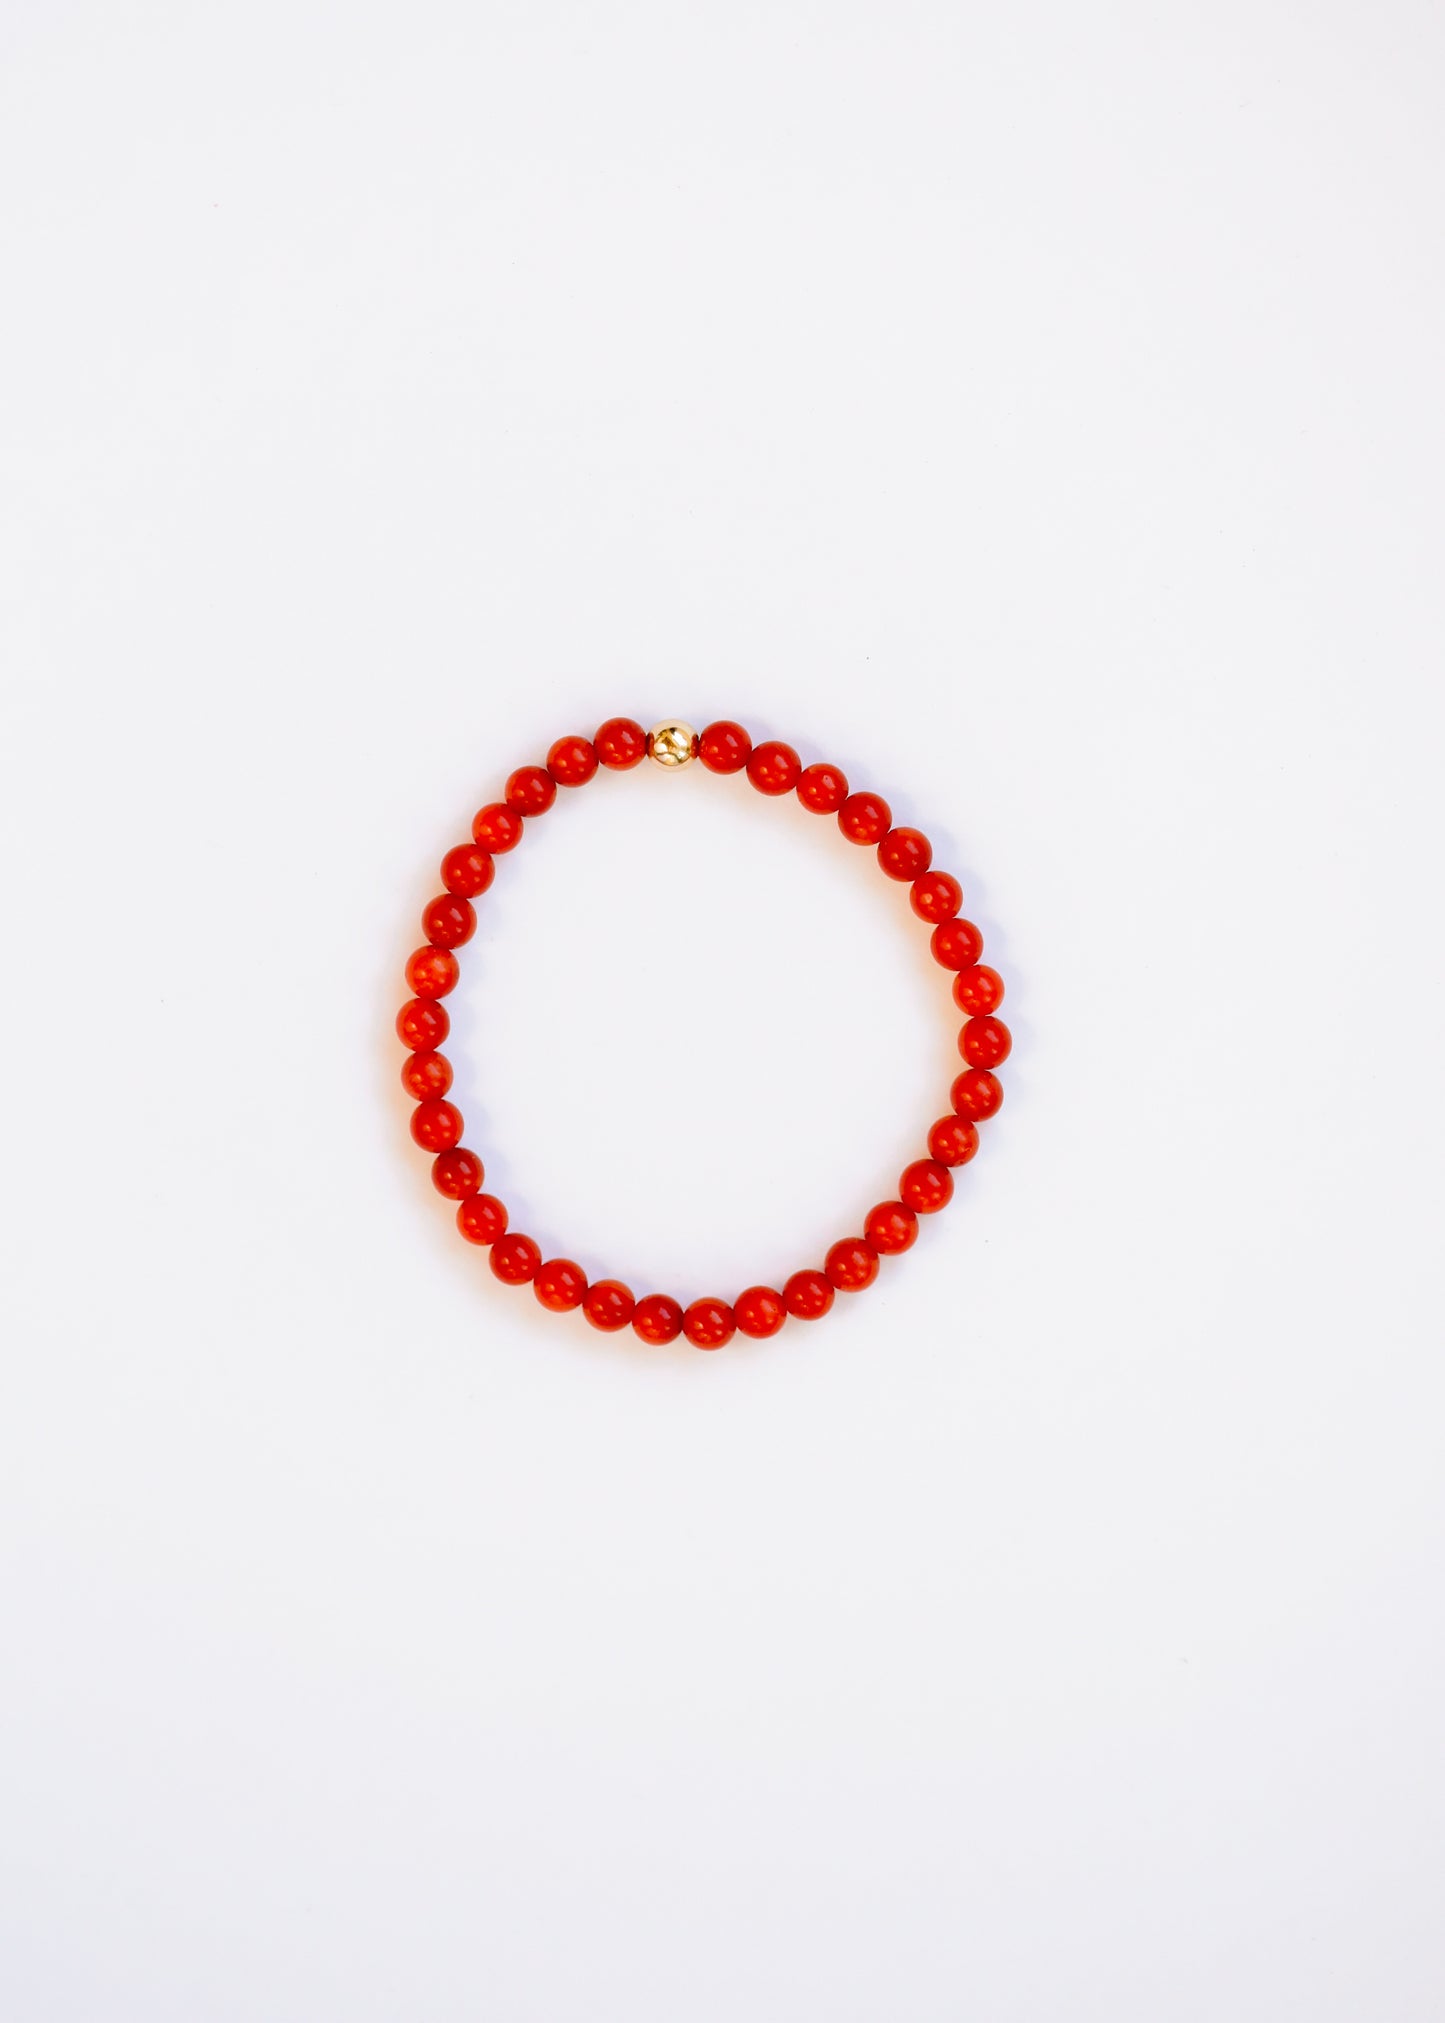 Vintage Collection of Red Coral + Gold || Bracelet